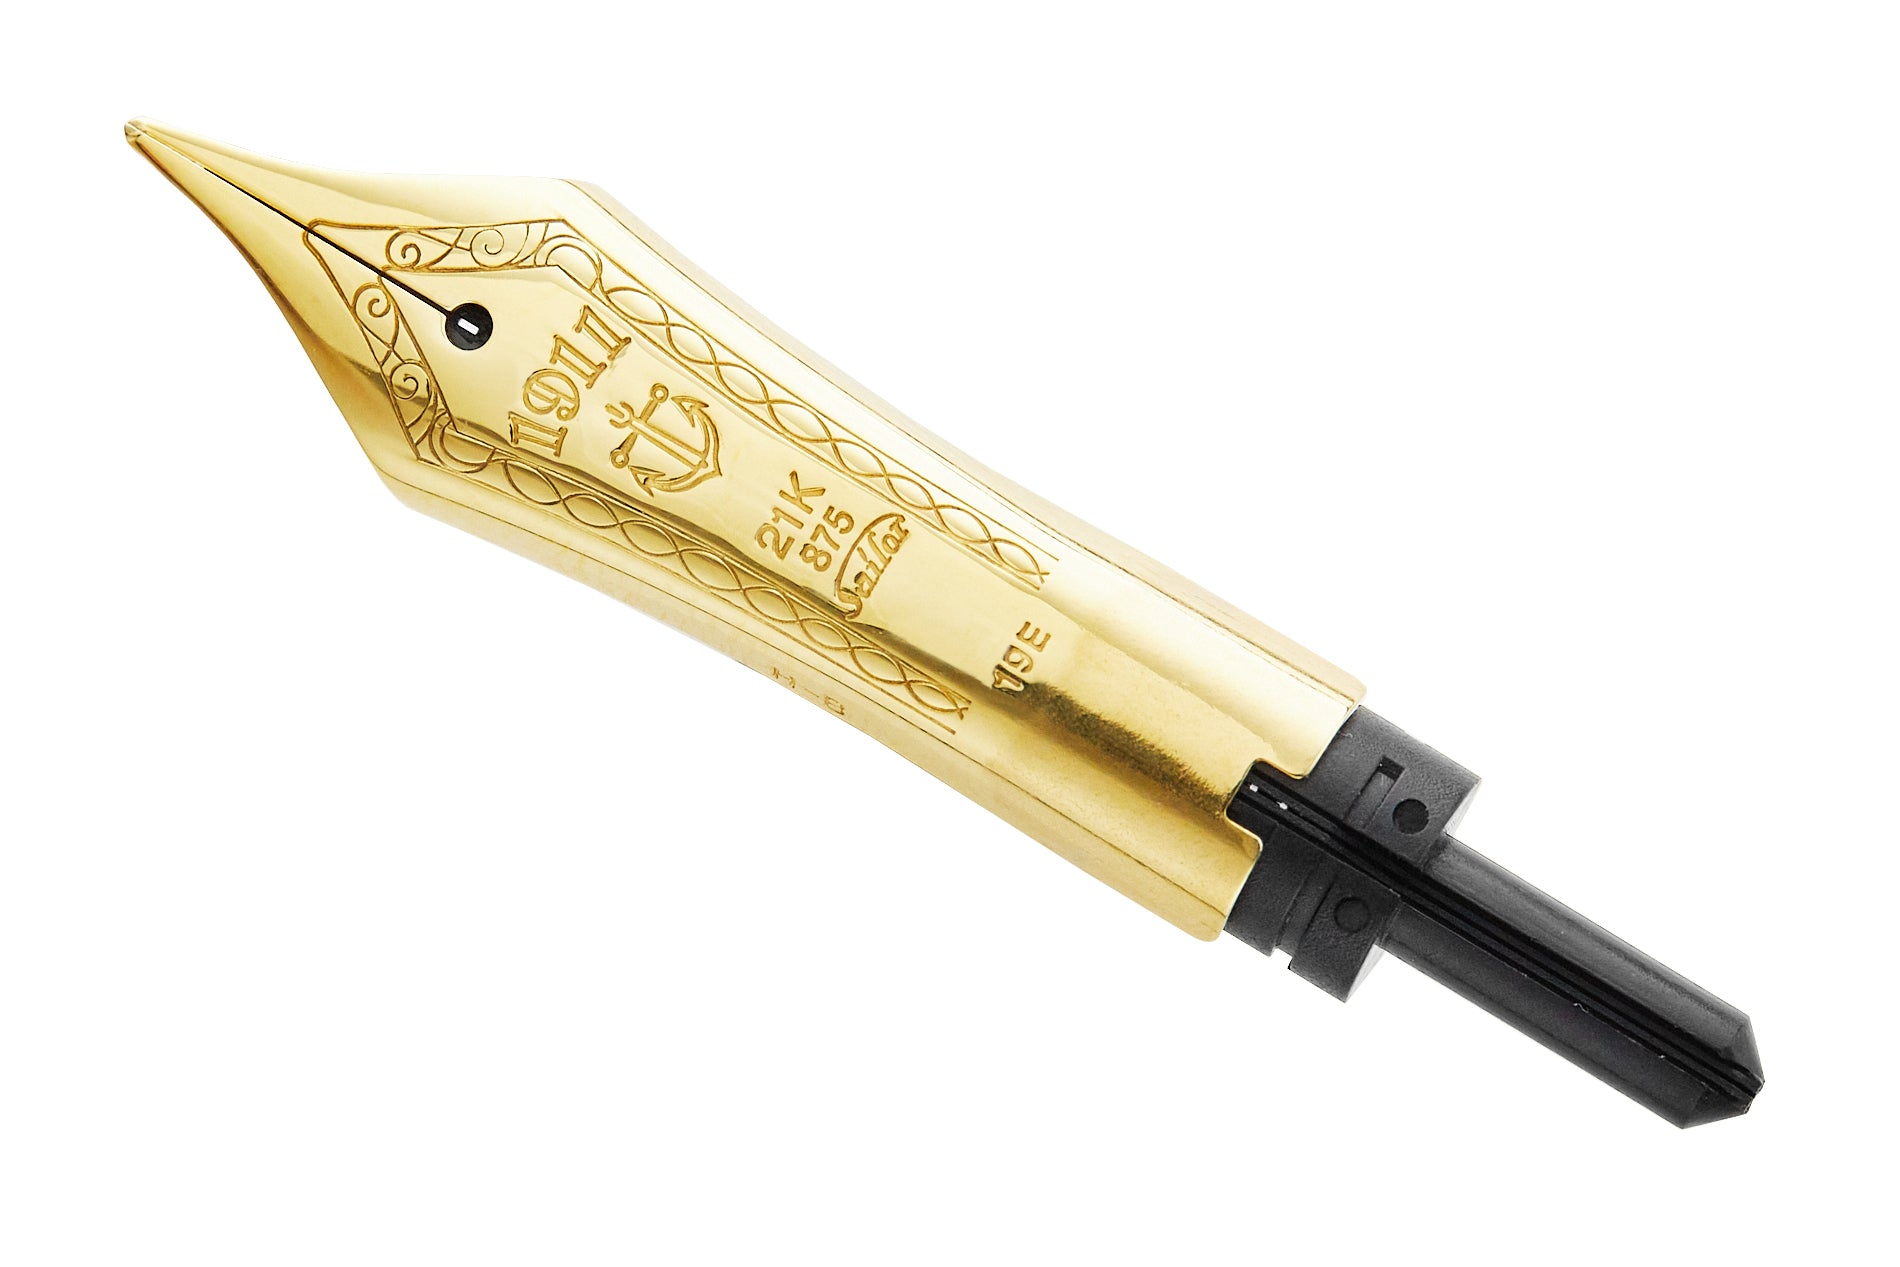 A Sailor gold fountain pen nib on a white background